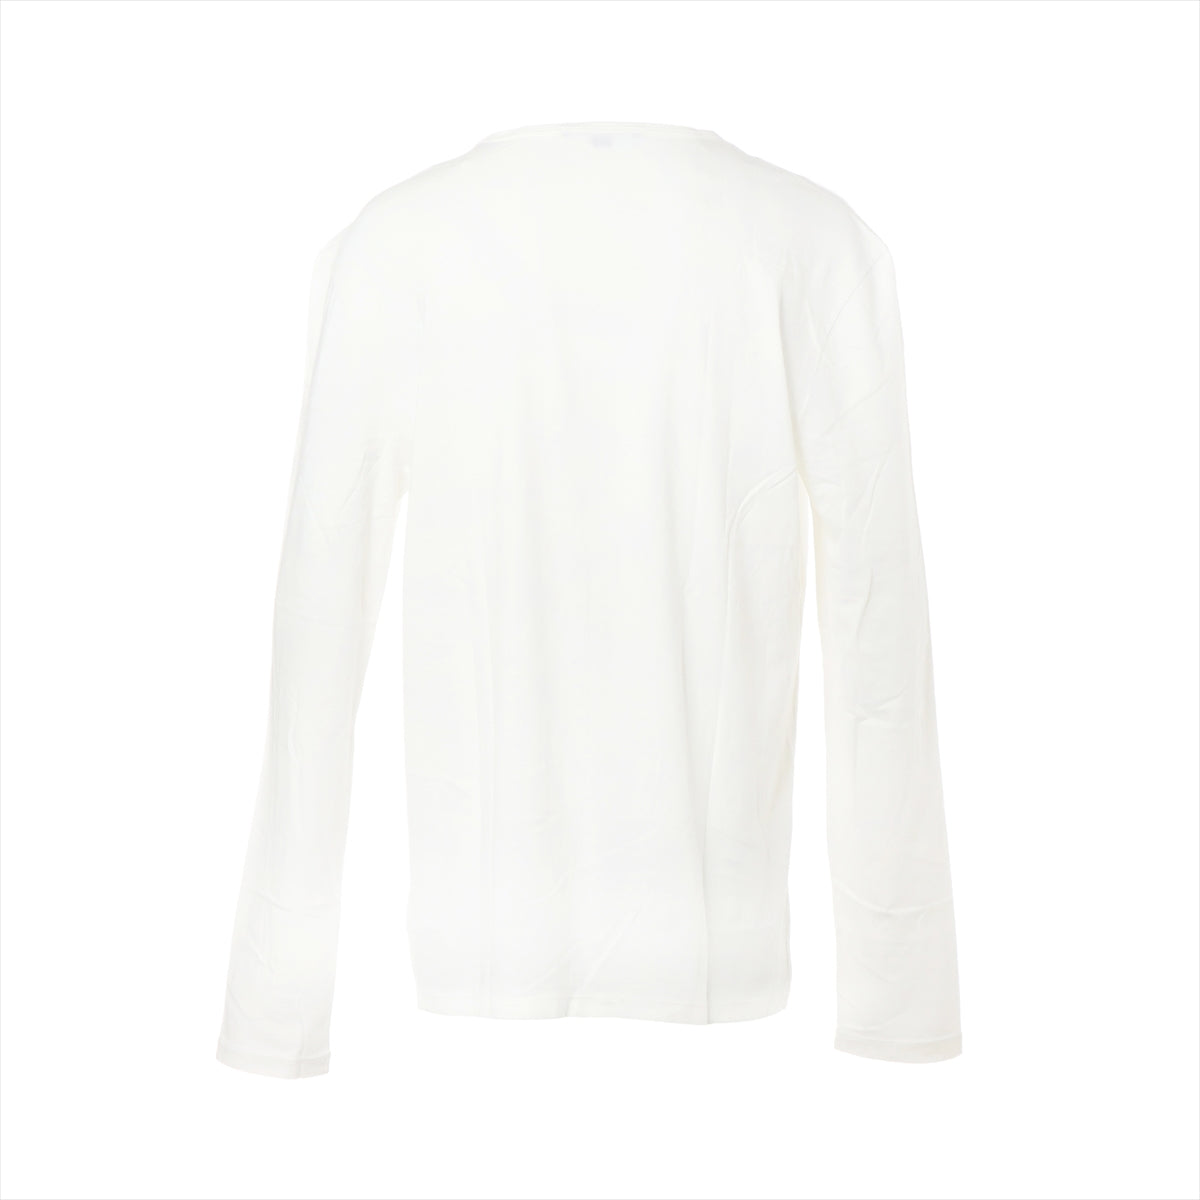 Gucci Interlocking G Cotton Long T shirts XXXL Men's White  368729